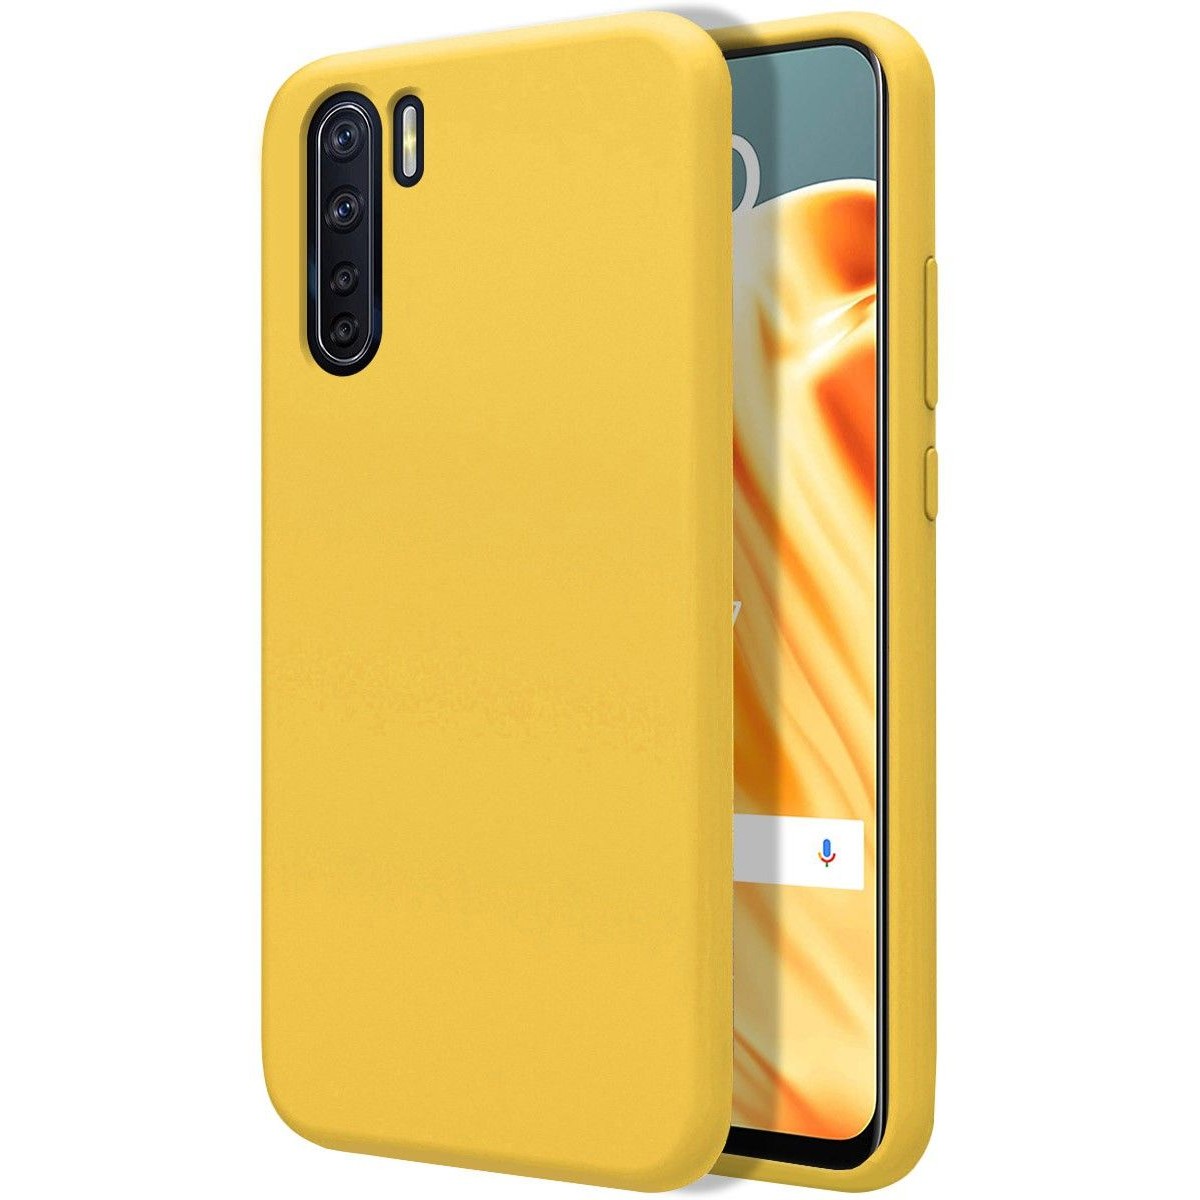 Funda Silicona Líquida Ultra Suave para Oppo A91 color Amarilla